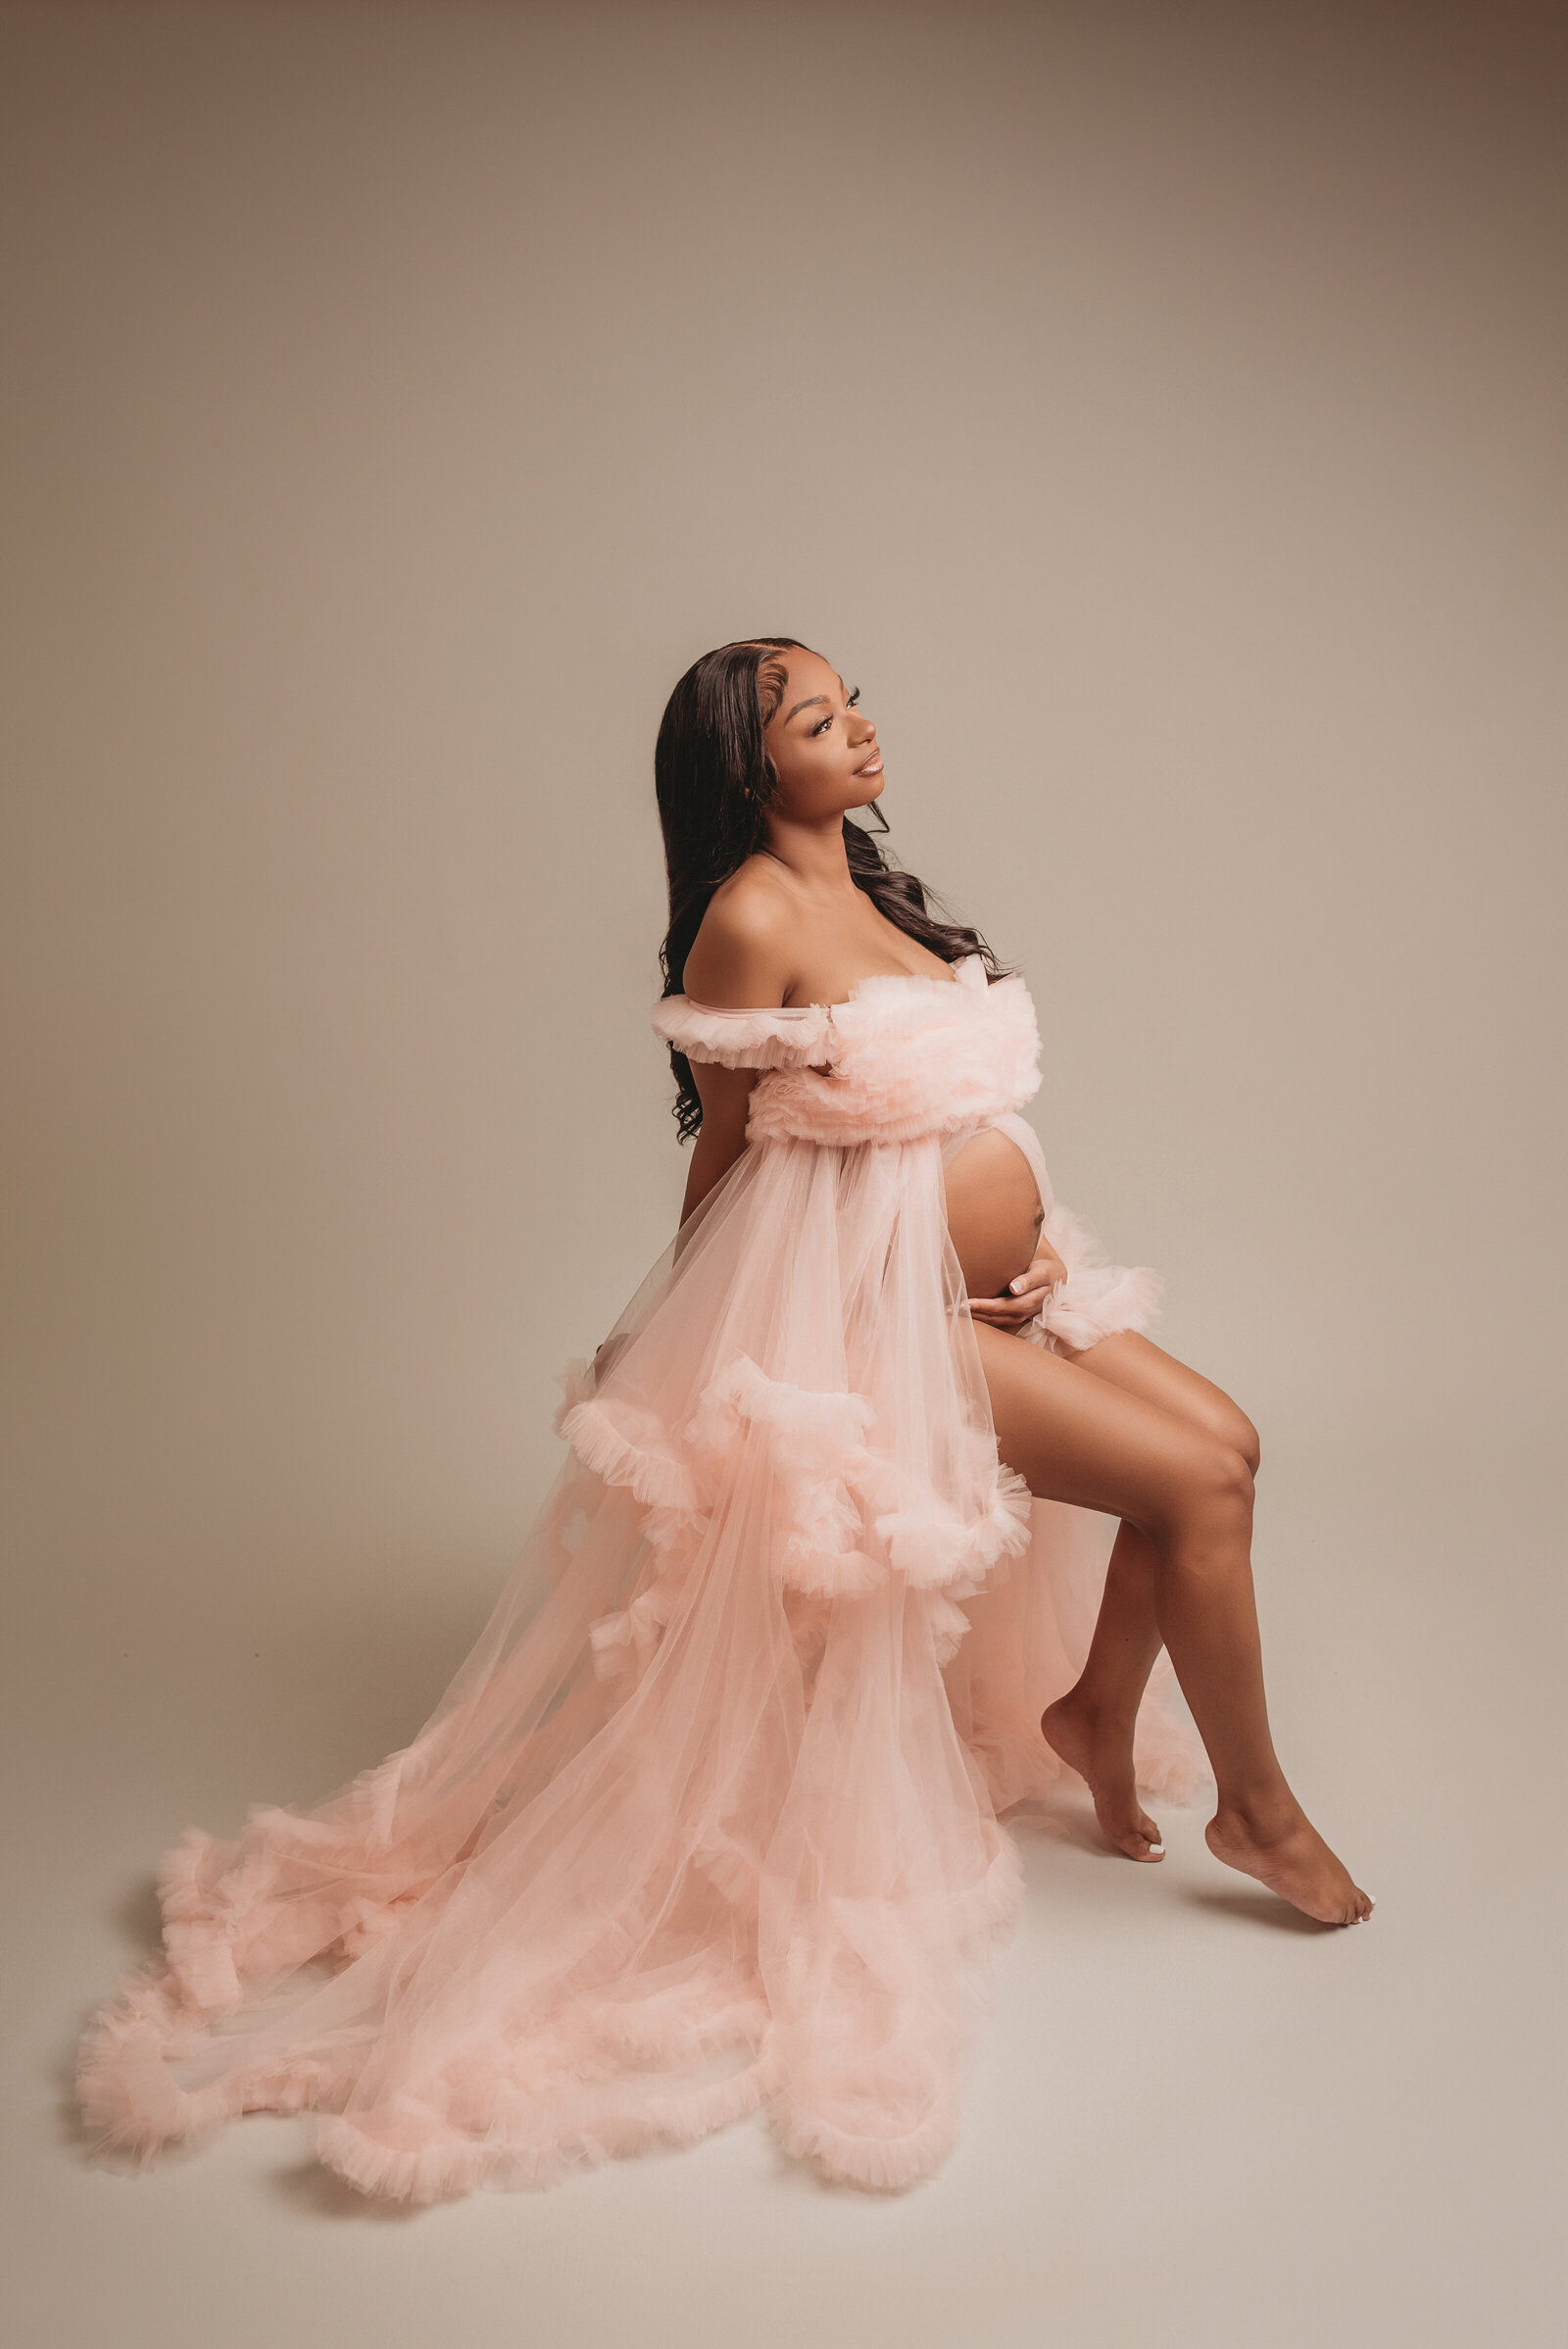 36 week pregnant woman at atlanta ga maternity portrait studio posing on stool in pink ruffle tulle dress holding baby bump on light grey backdrop